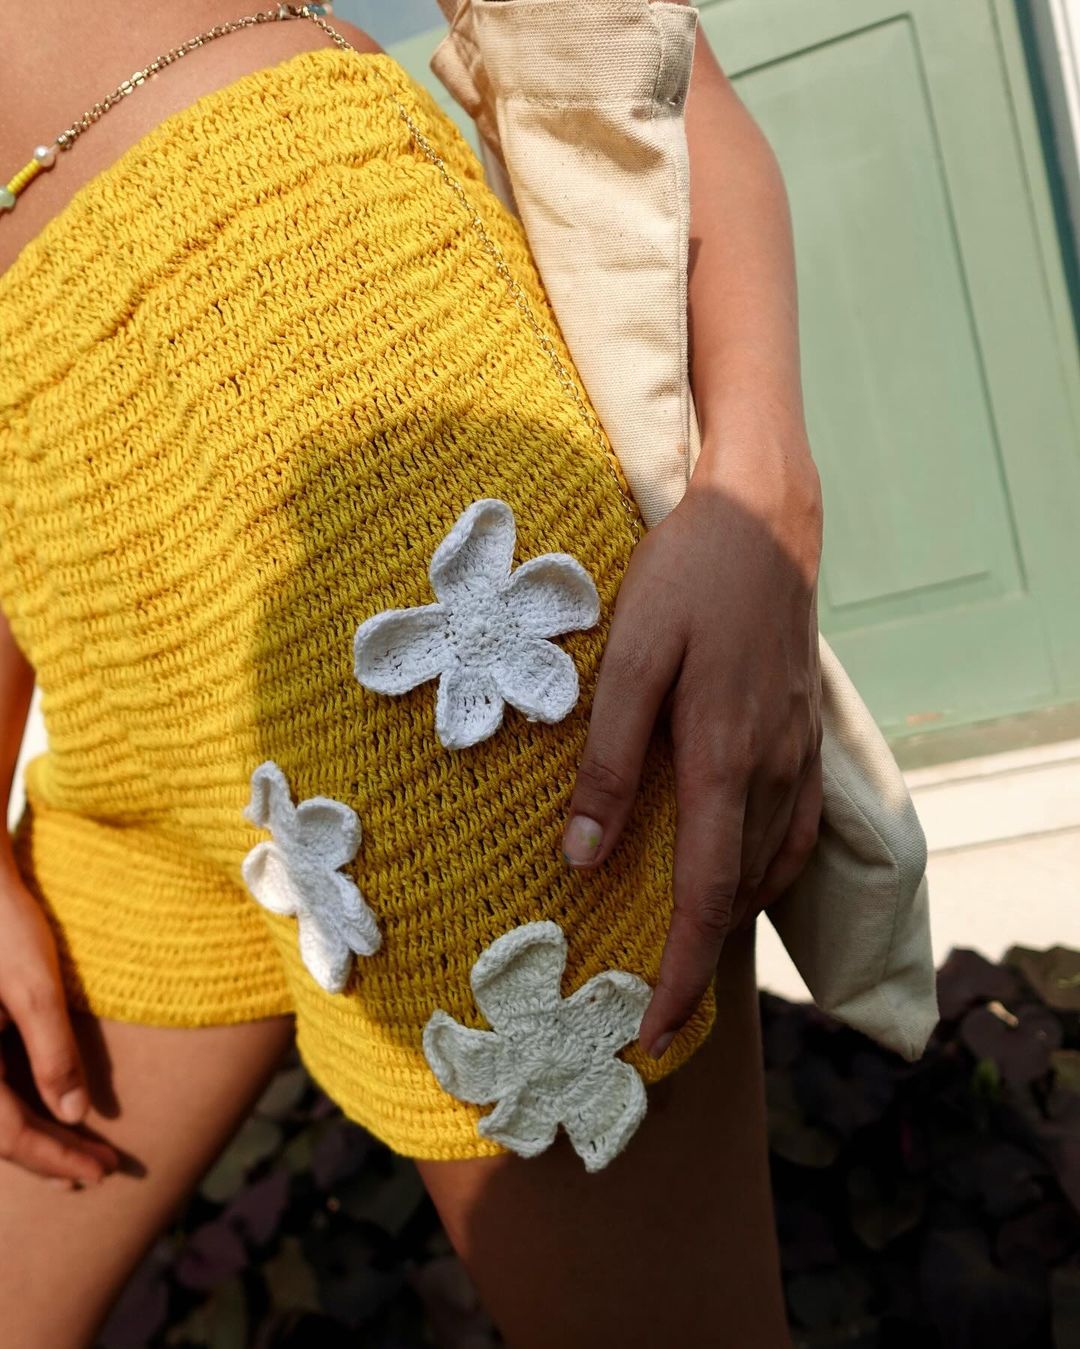 Spongebob inspired Crochet Shorts